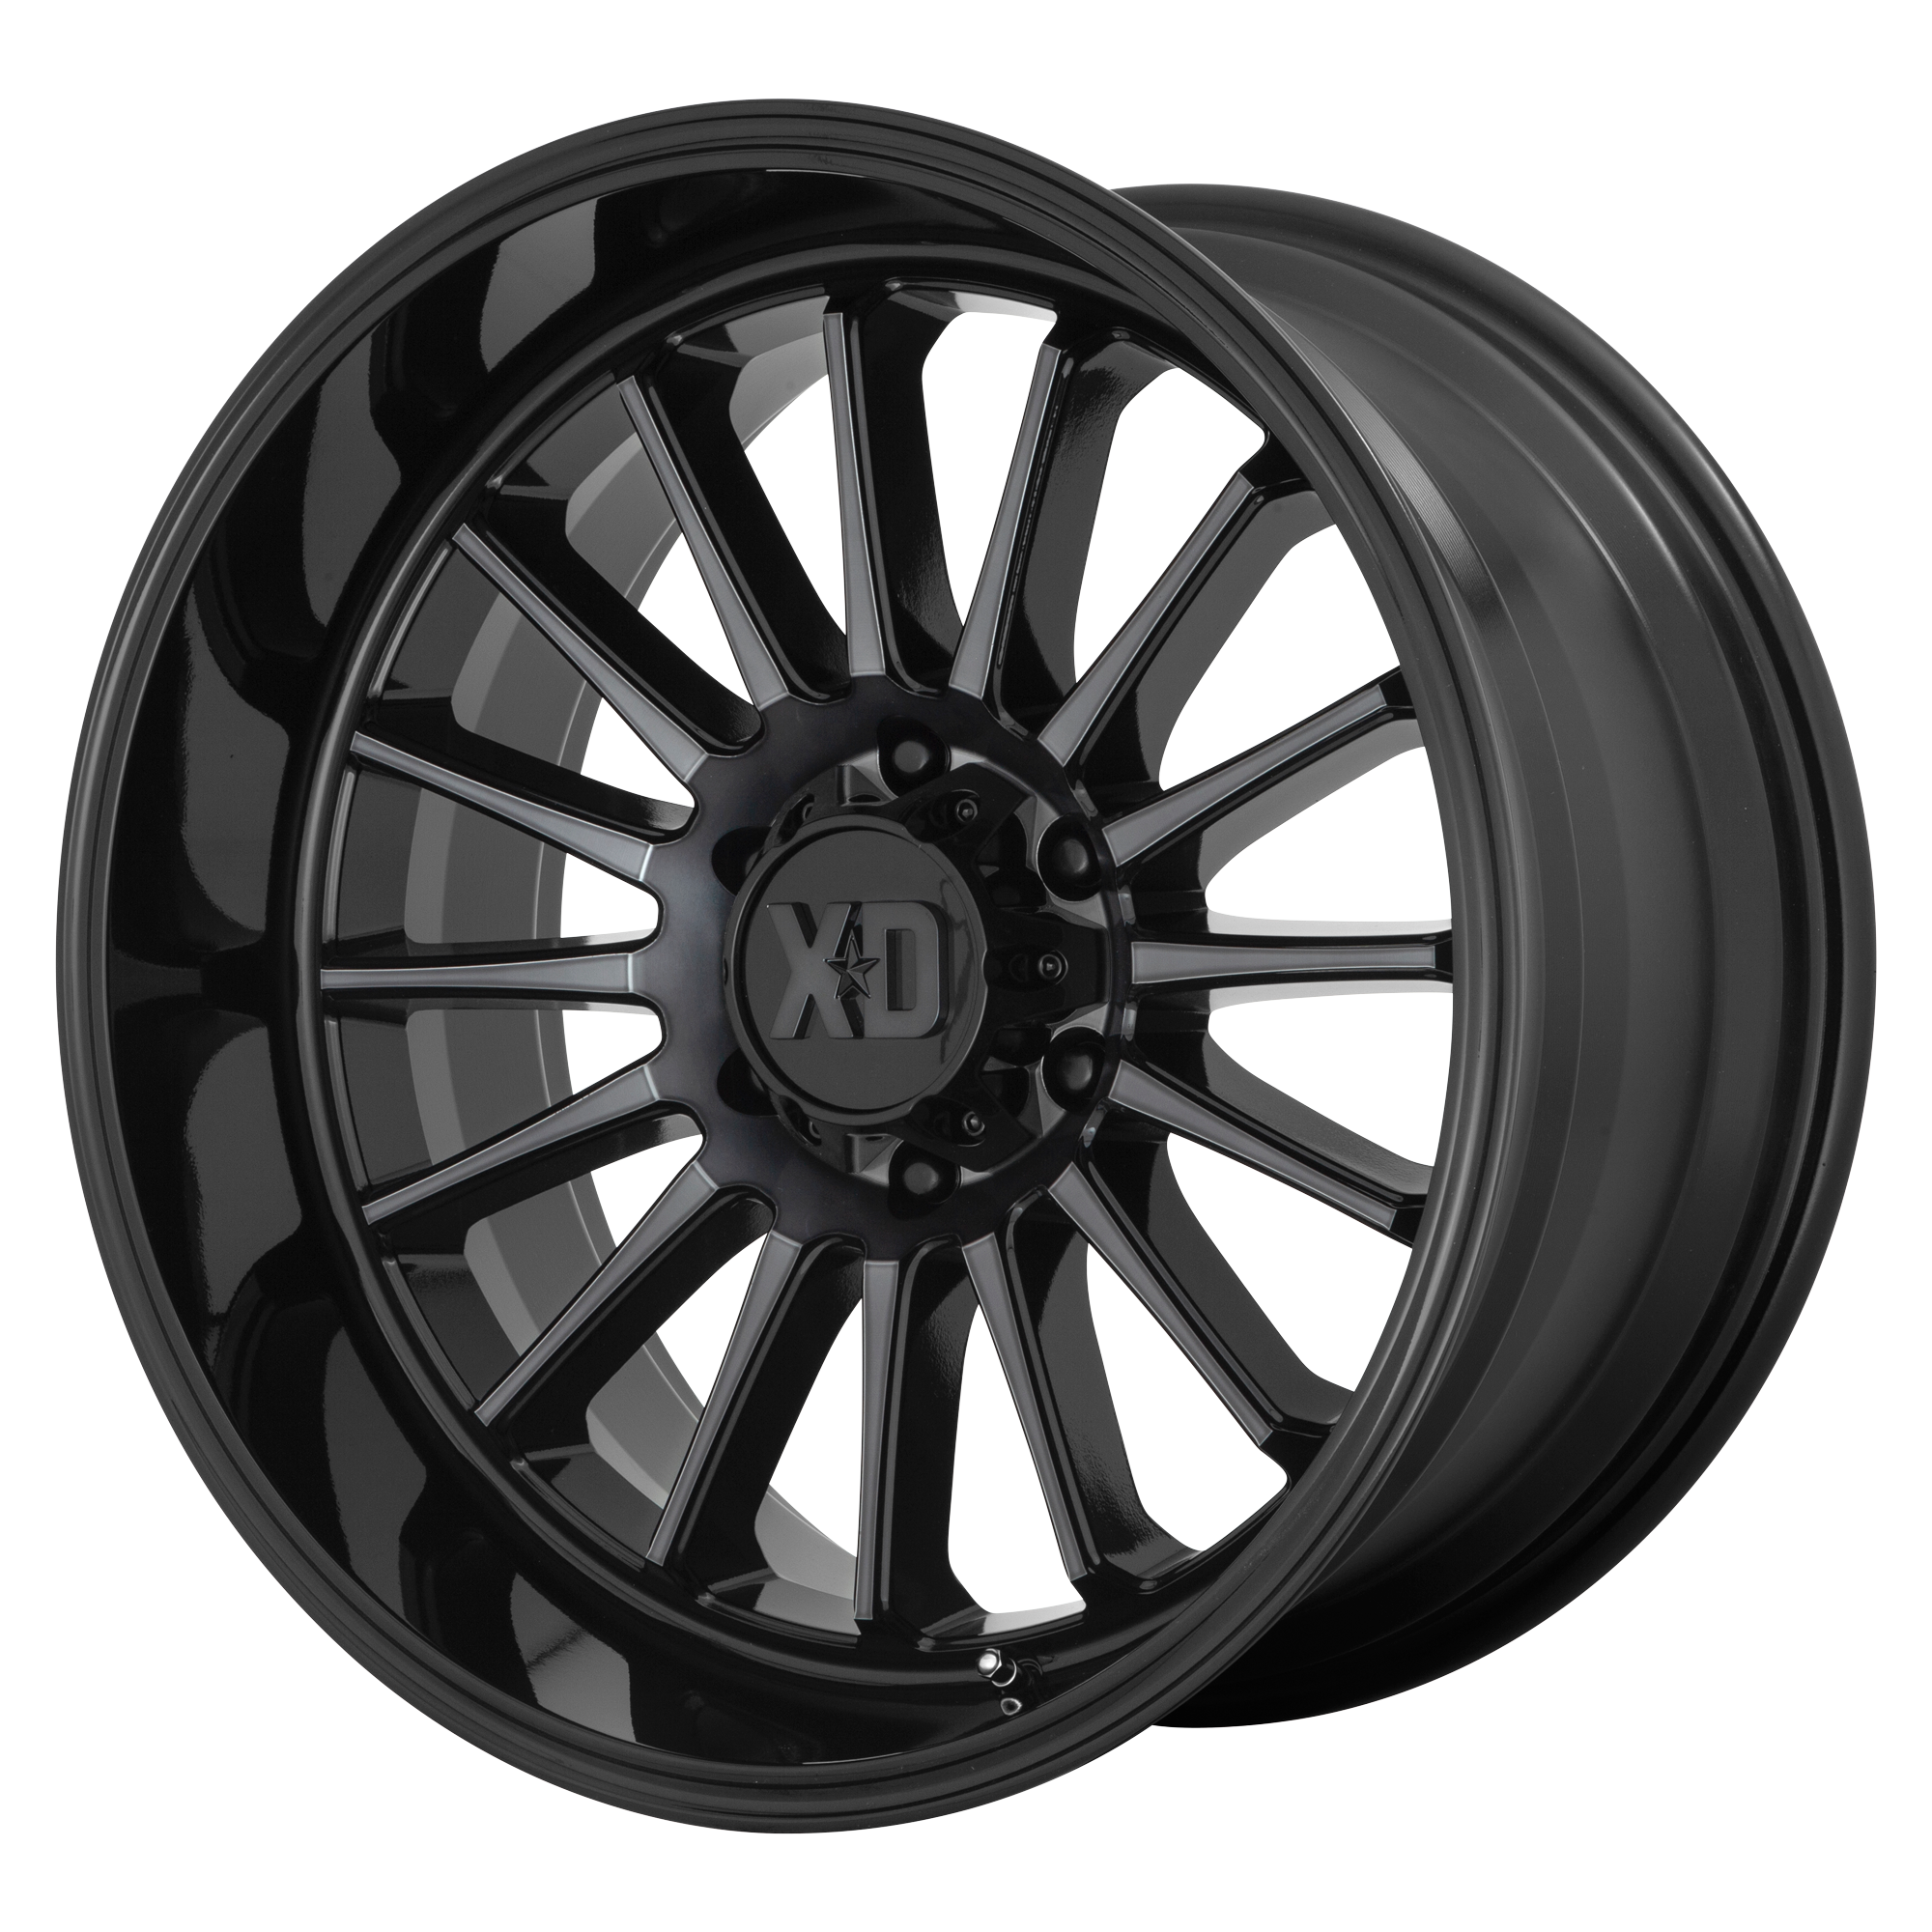 XD 20"x10" Non-Chrome Gloss Black With Gray Tint Custom Wheel ARSWCWXD85721063418N